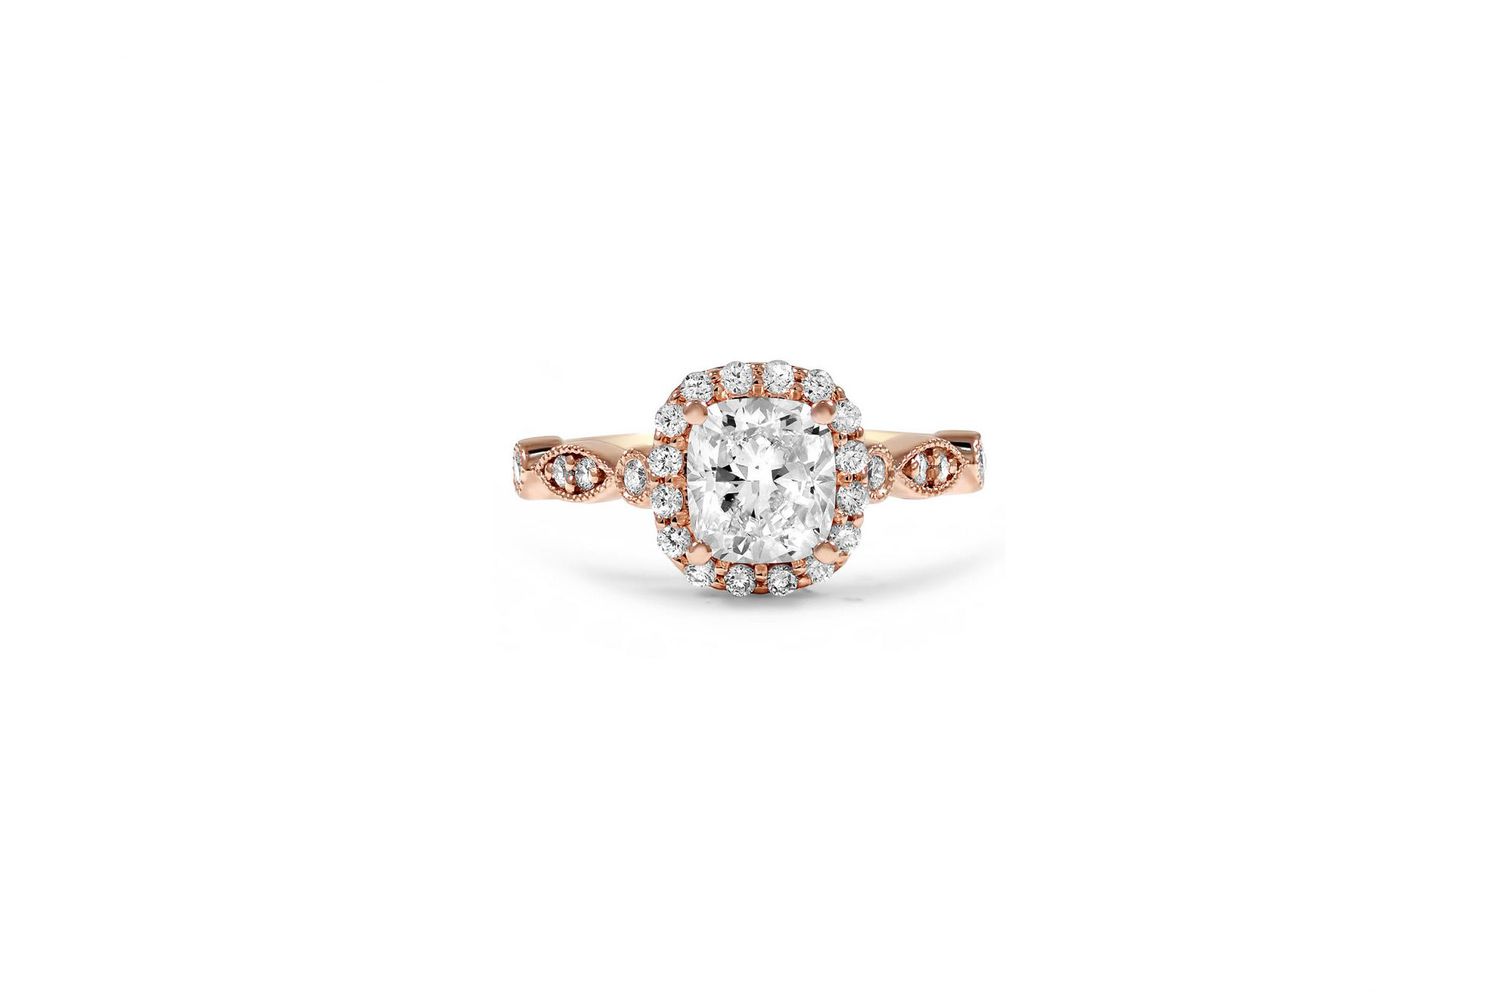 Cushion-Cut Diamond Engagement Ring on Rose Gold Band